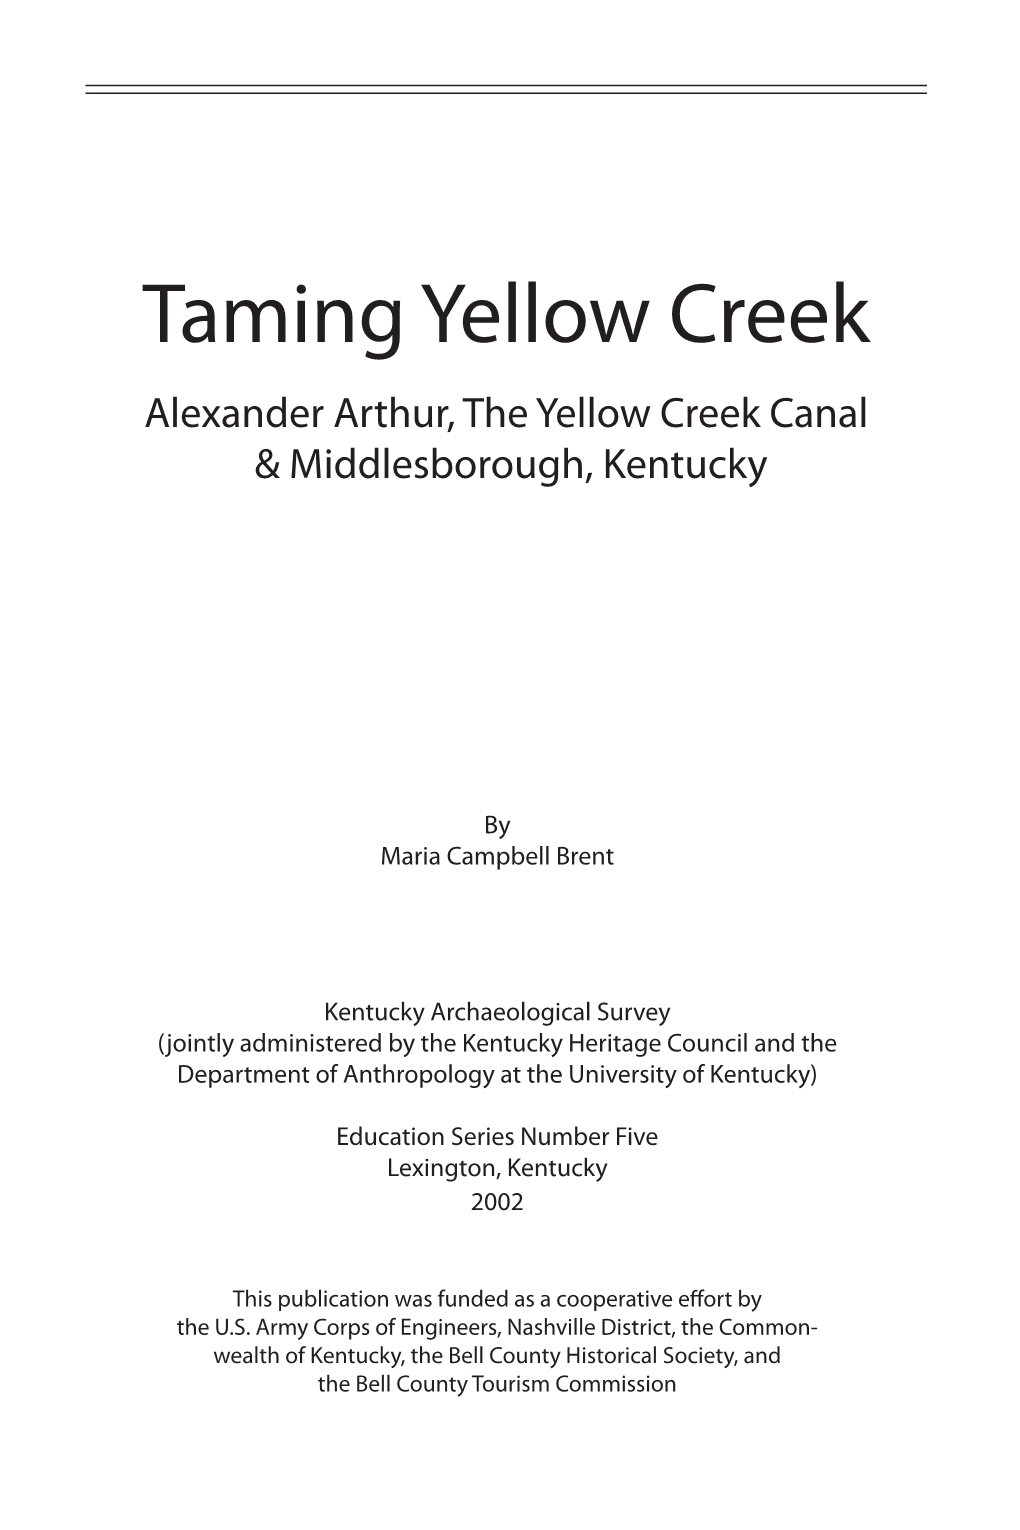 Taming Yellow Creek Alexander Arthur, the Yellow Creek Canal & Middlesborough, Kentucky